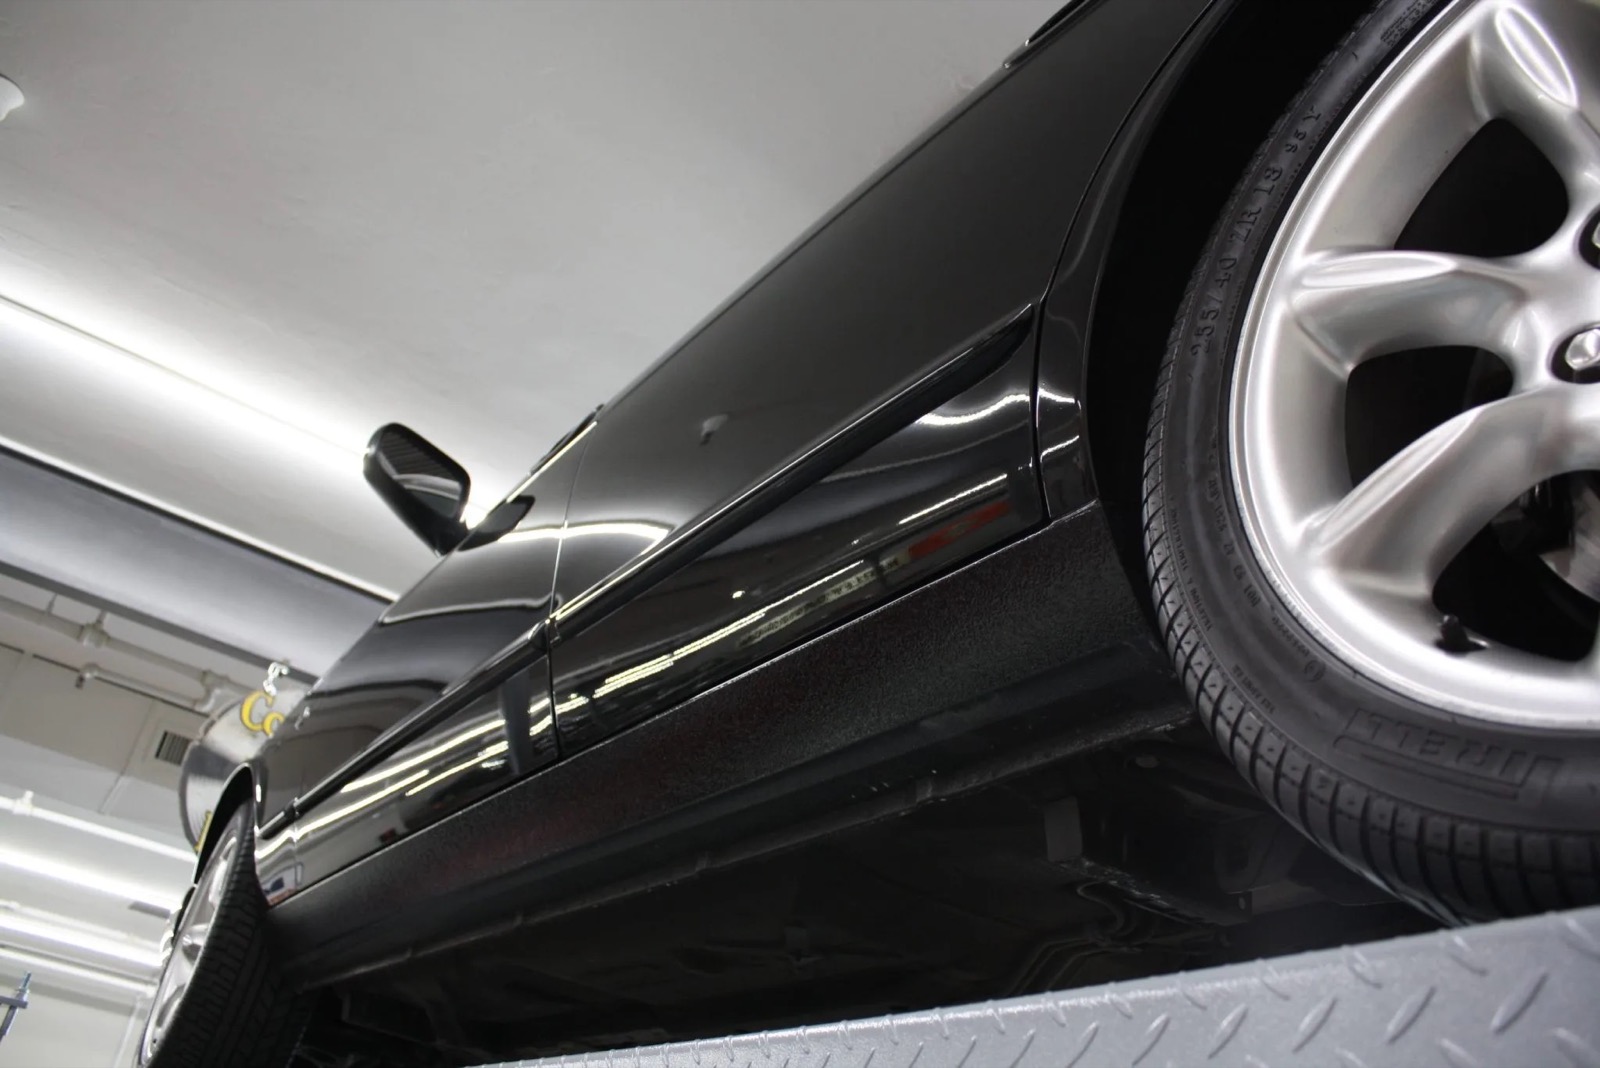 roestvrije Jaguar XJR